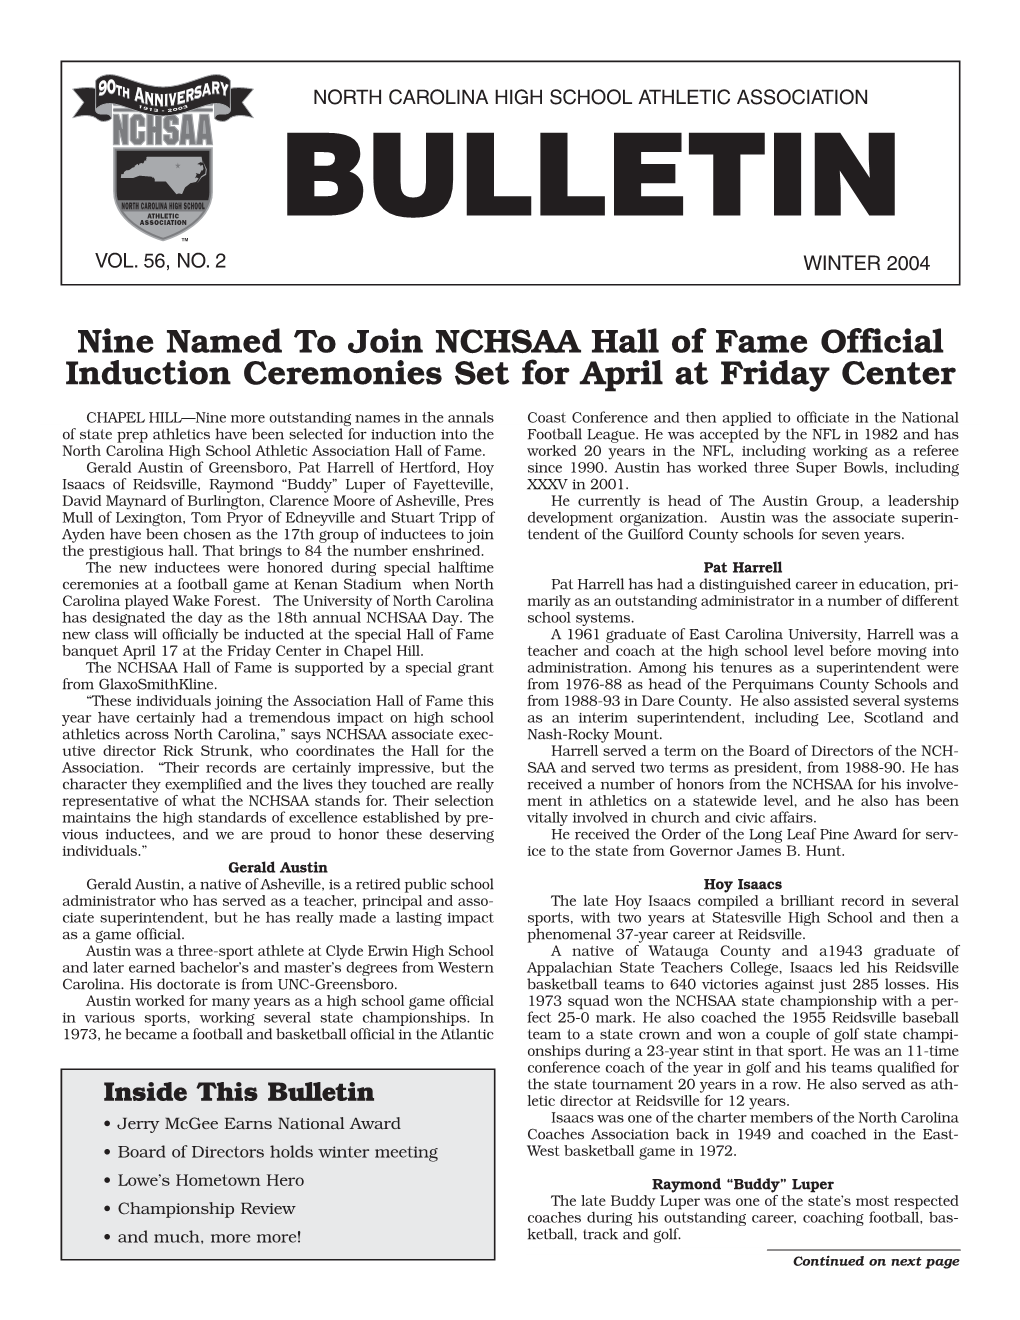 NCHSAA Bulletin Win04